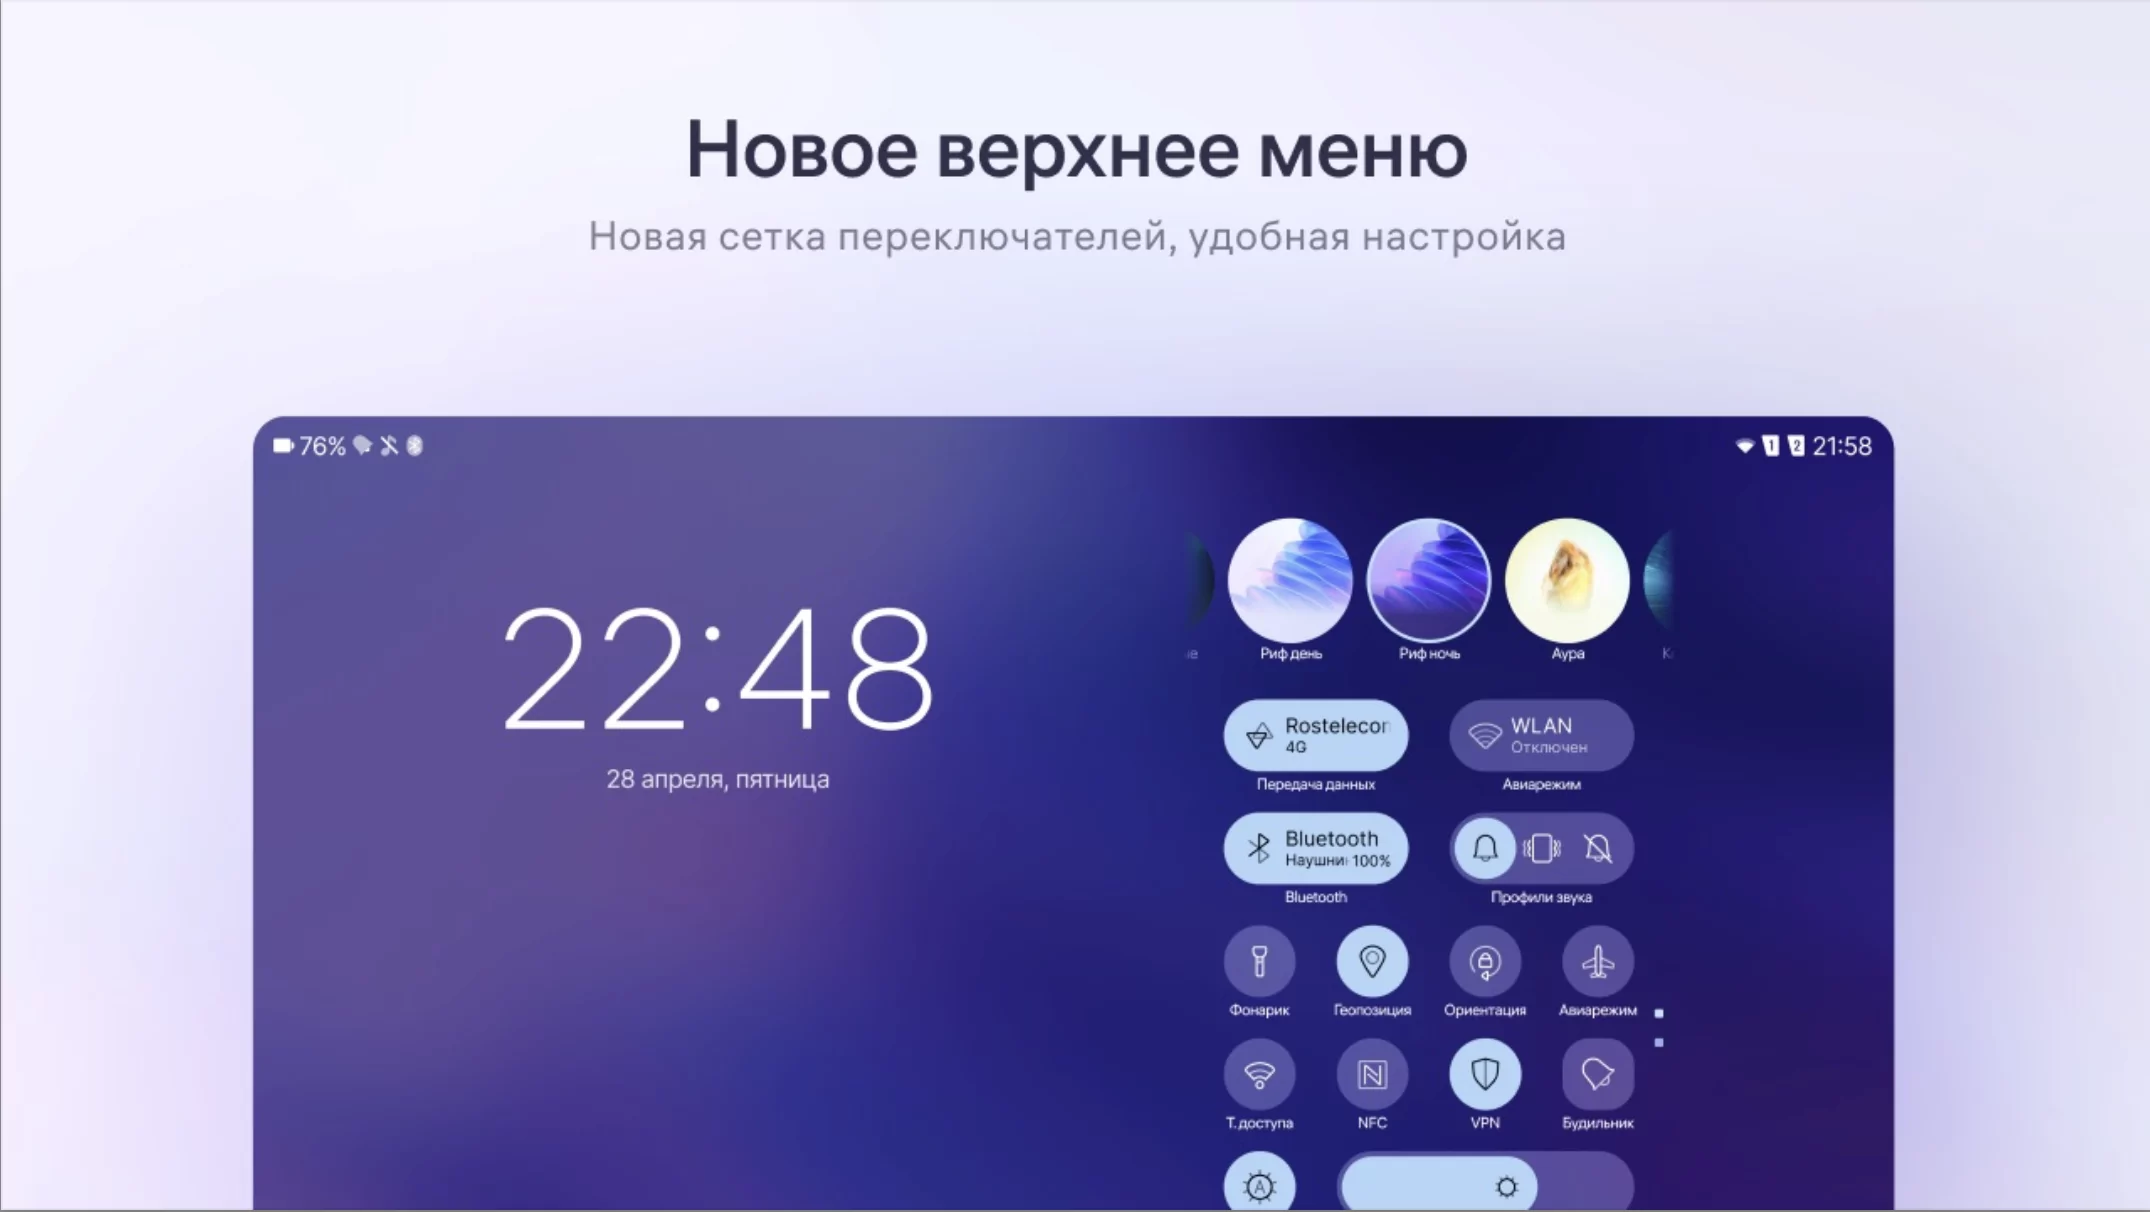 Interface на русском